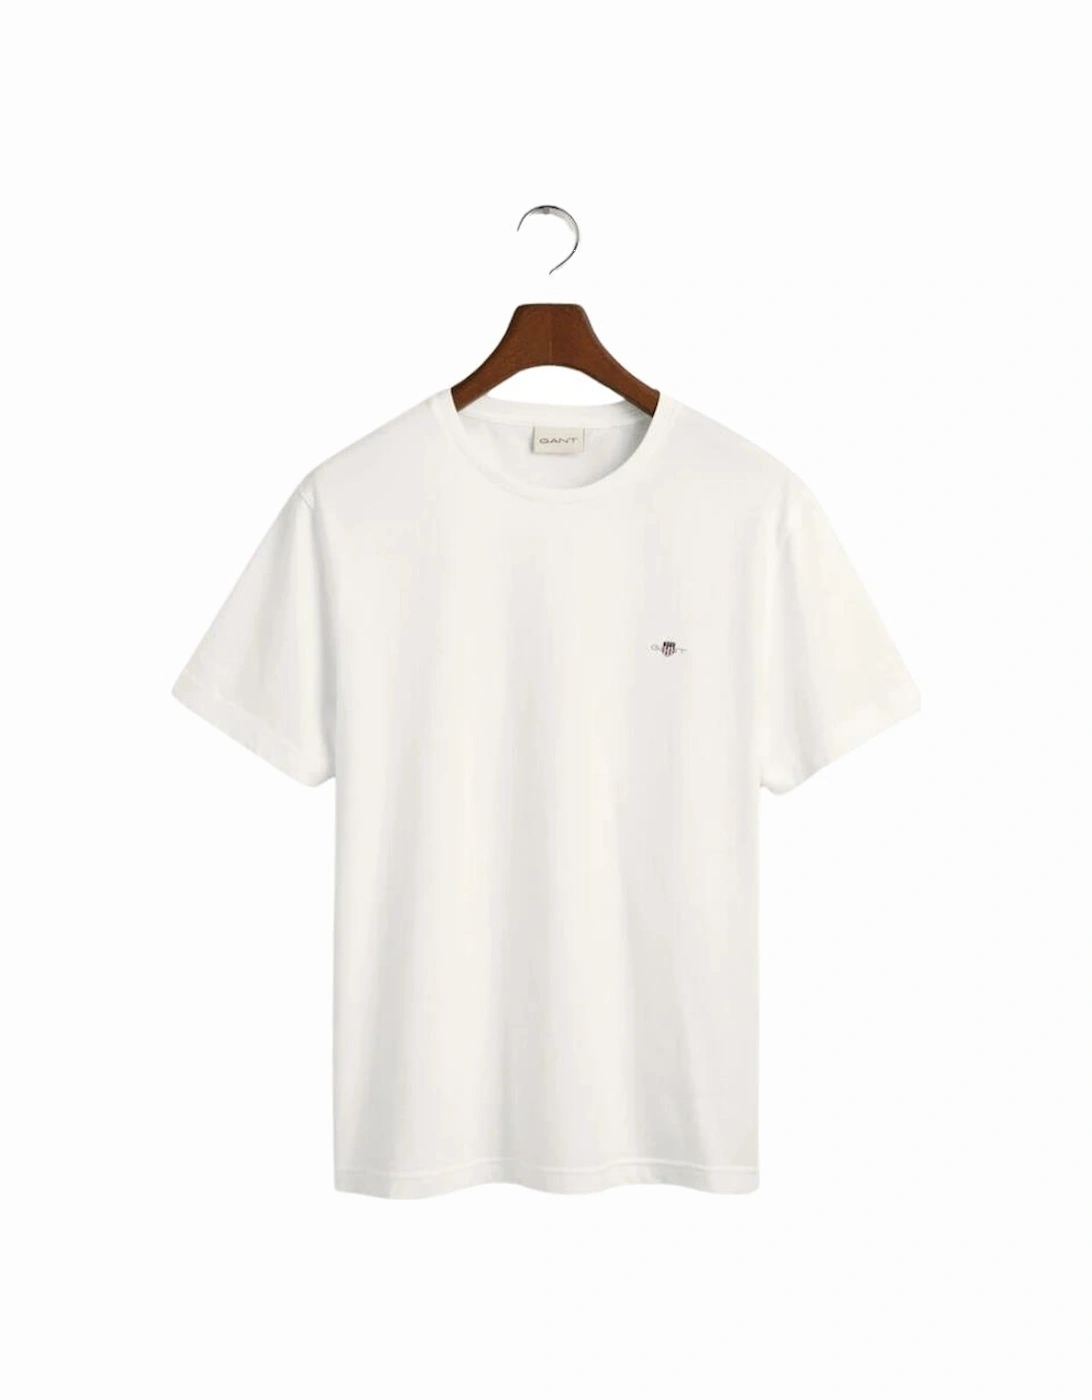 Reg Shield SS T-Shirt - White, 4 of 3